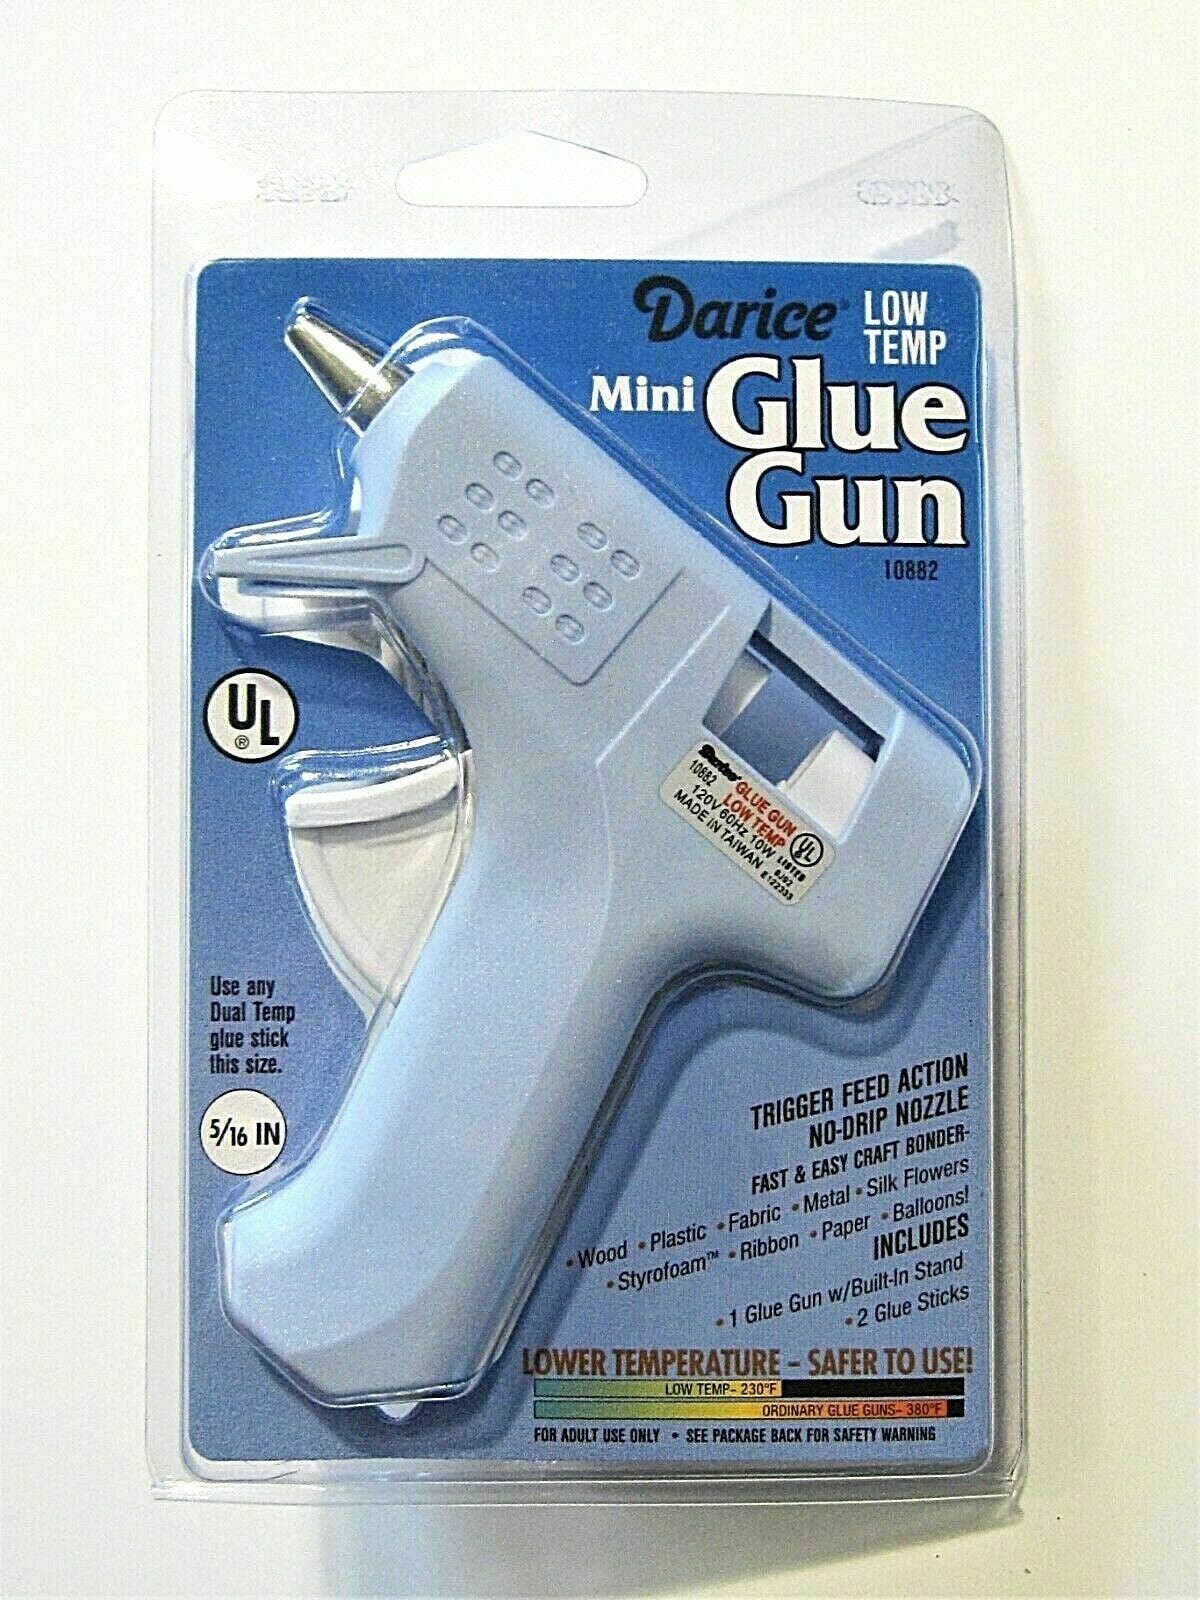 Mini Glue Gun - New Darice Low Temp Crafting Fast Heating Supply - $16.33